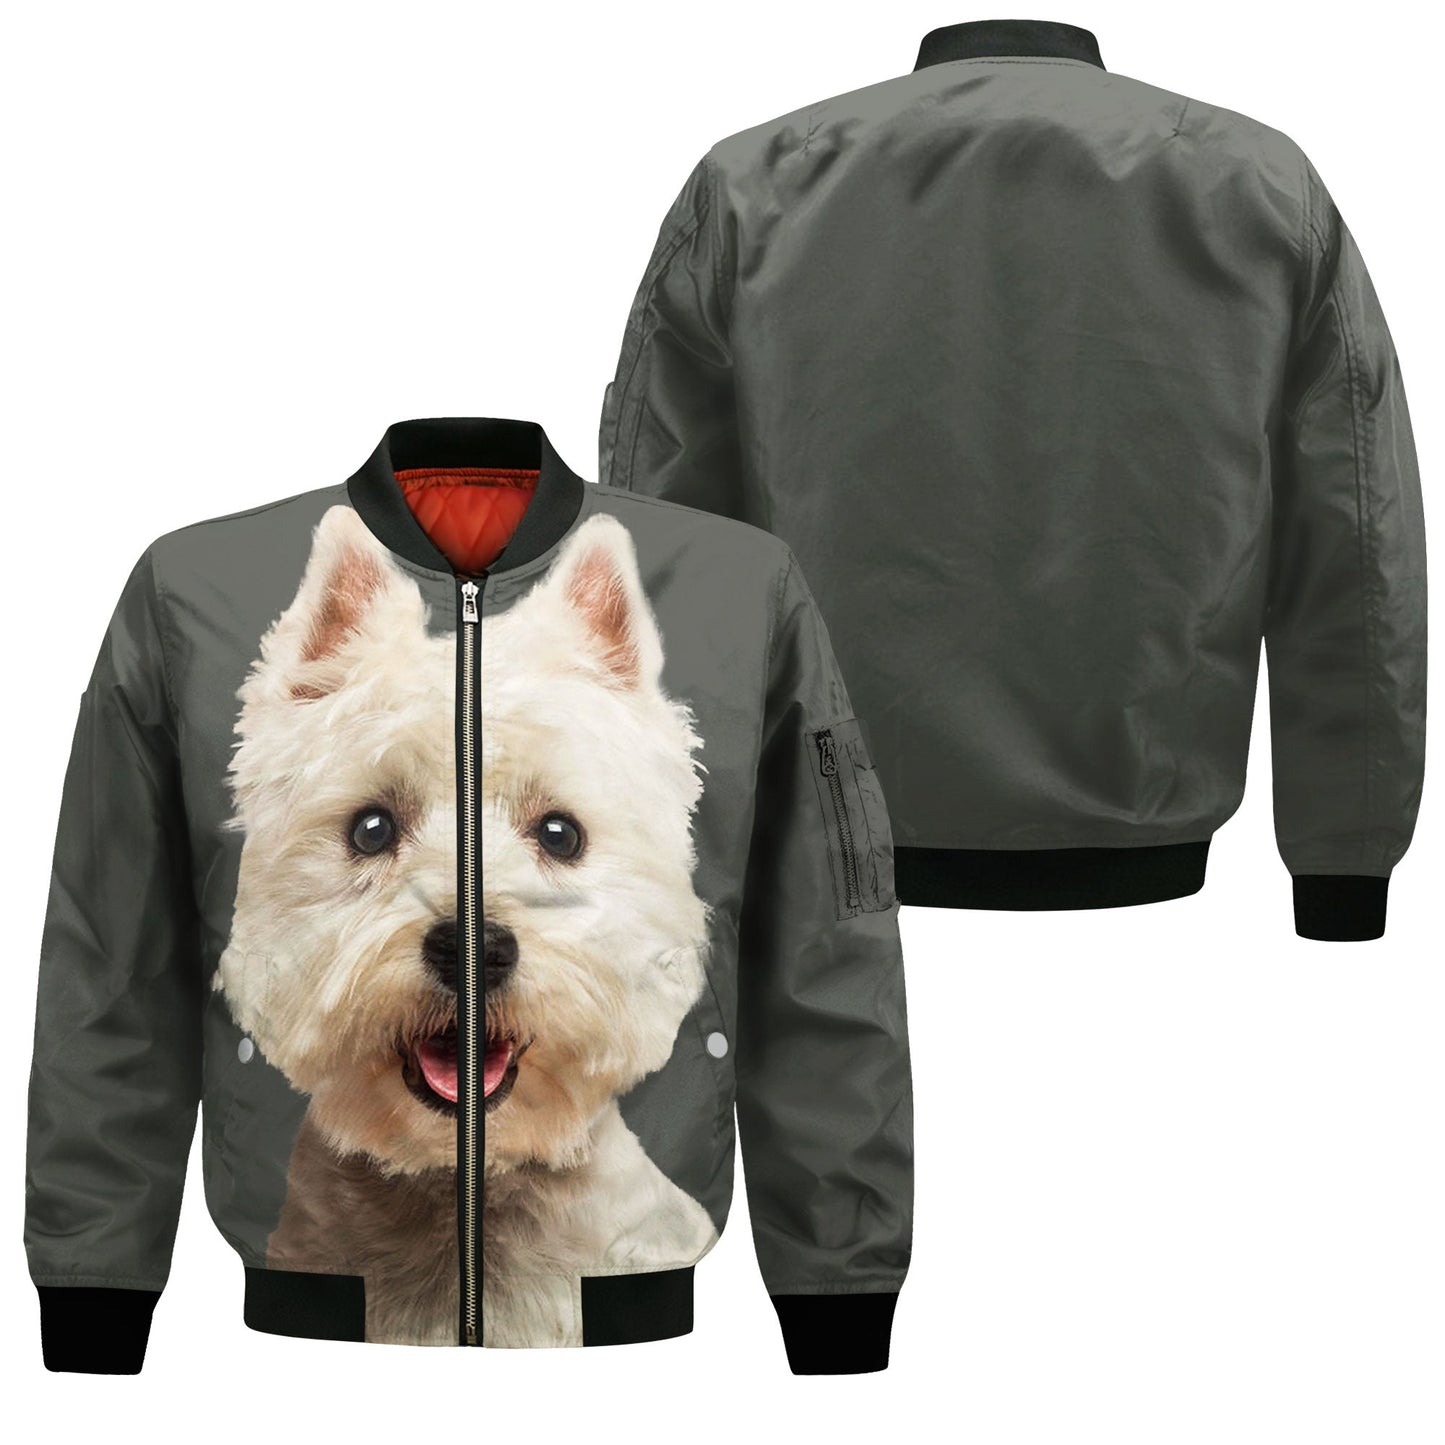 West Highland White Terrier - Unisex 3D Graphic Bomber Jacket